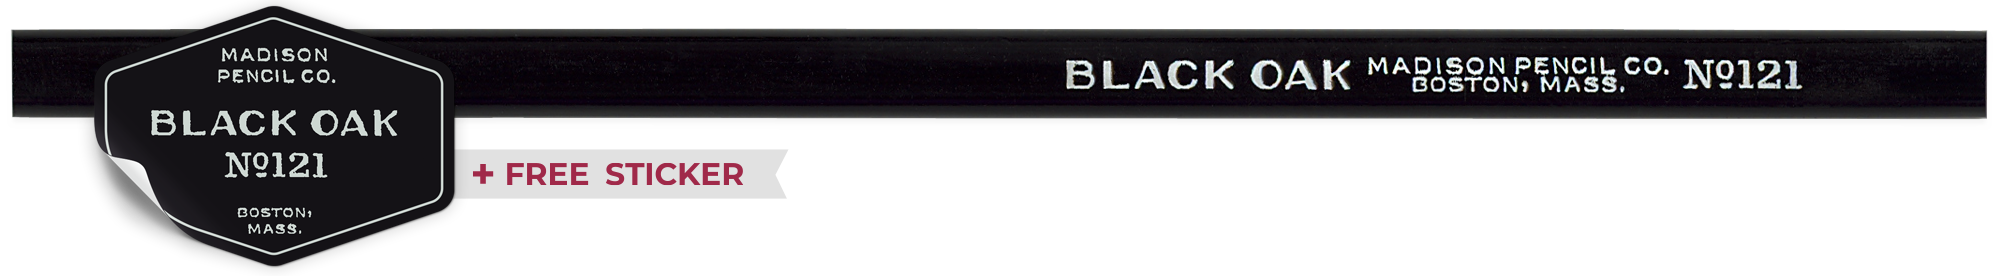 Black Oak Vintage Pencil